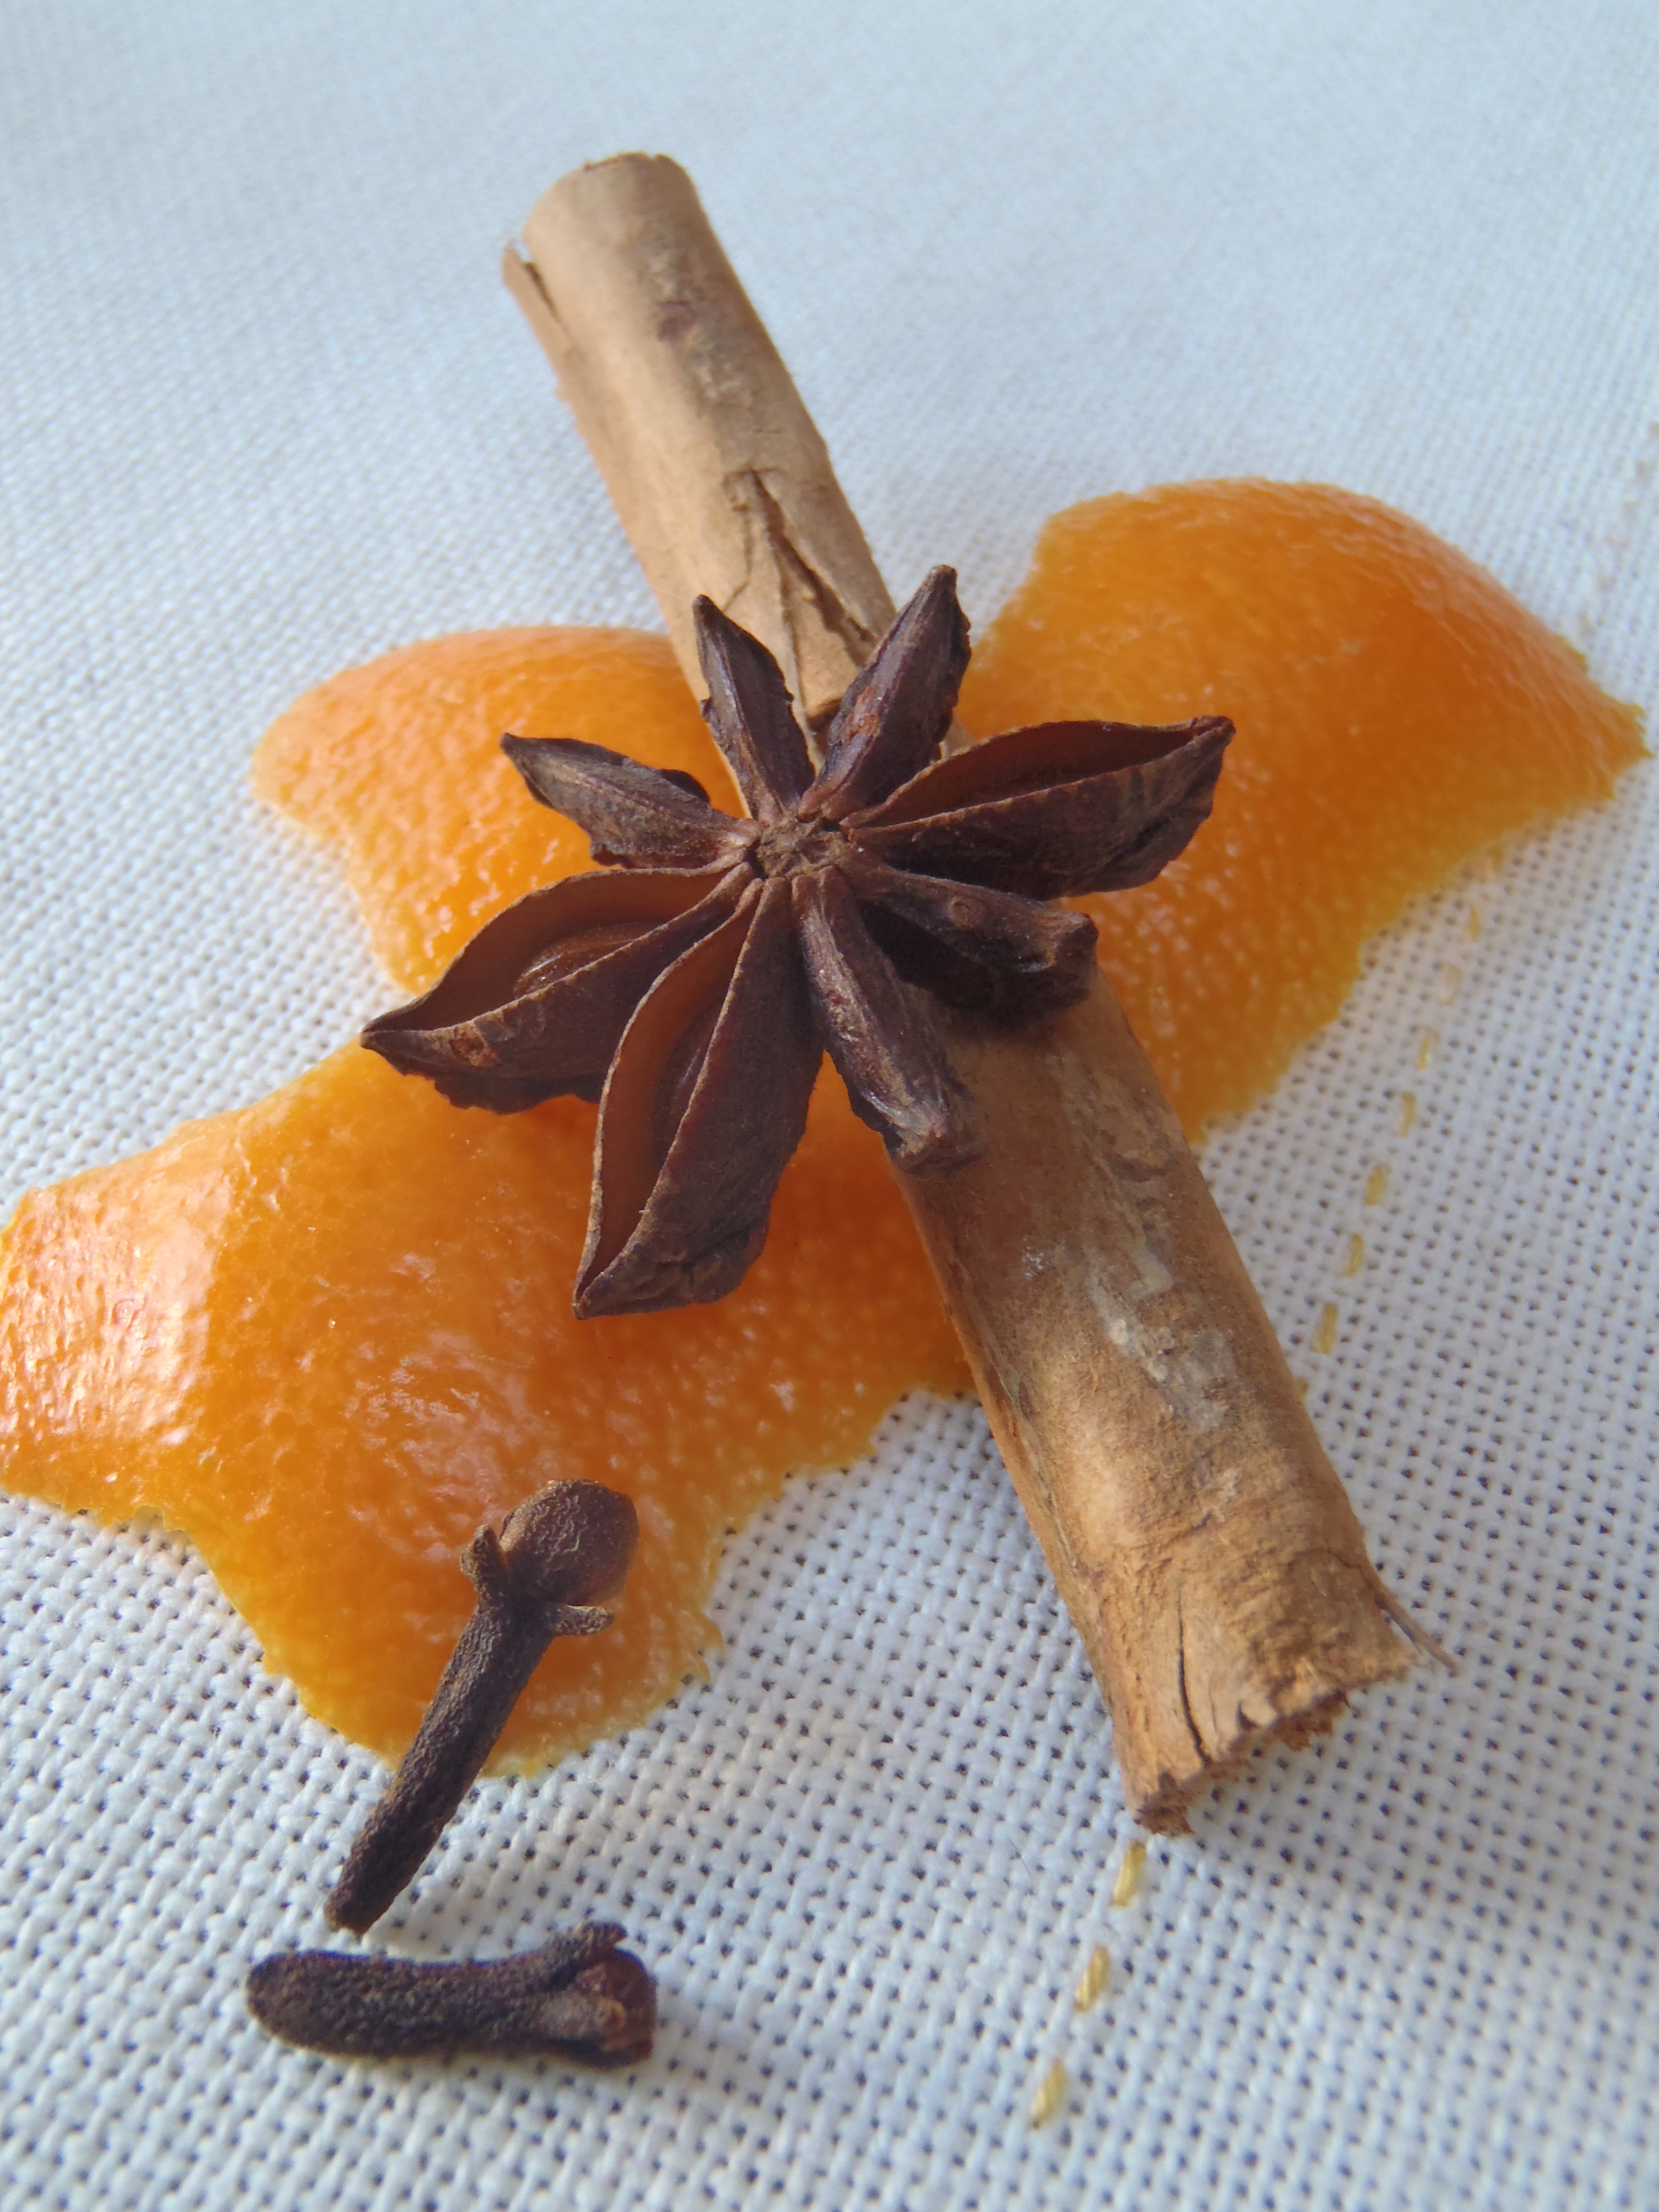 Orange peel, clove, cinnamon, and star anise